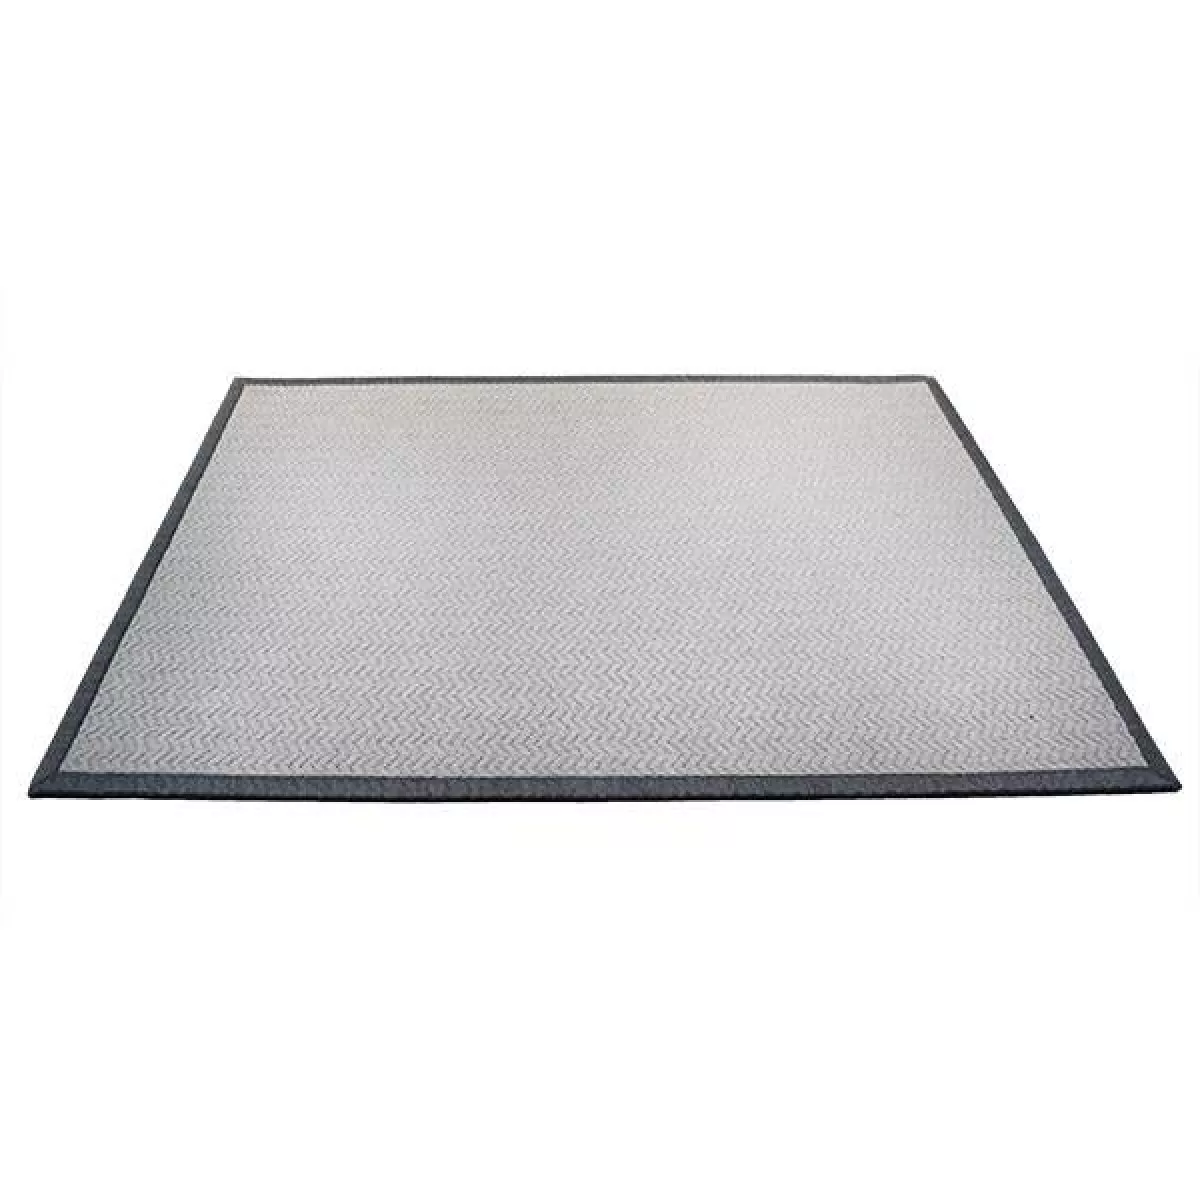 #1 - Bolero afpasset tæppe med kantbånd - grå - 200 x 300 cm.